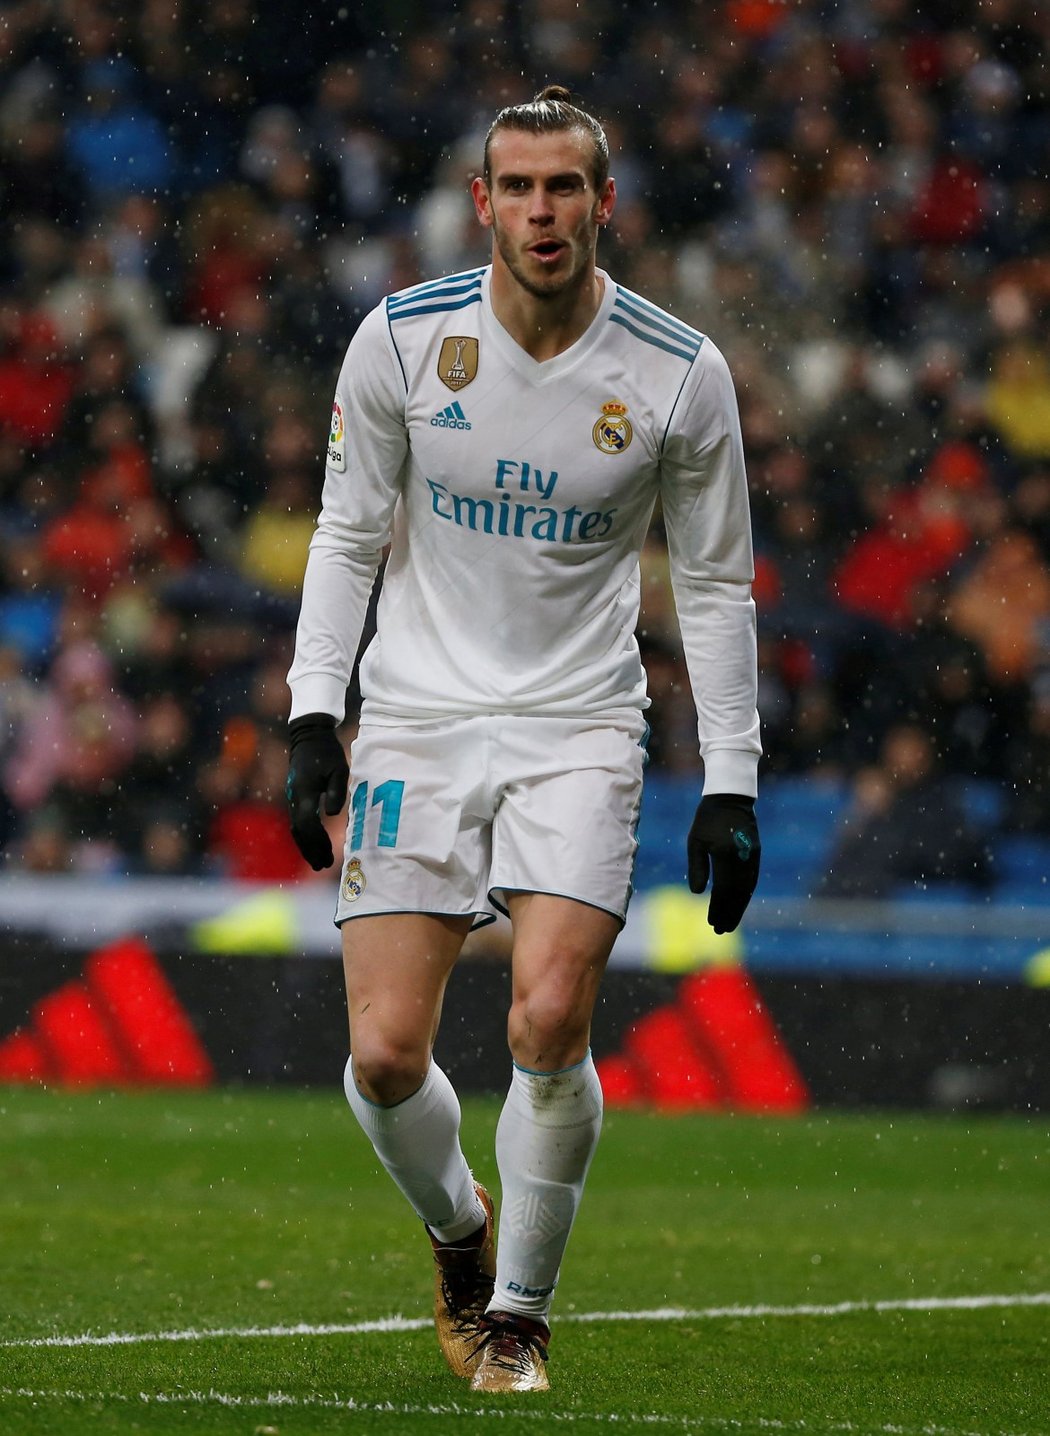 Gareth Bale sice skóroval, ale rozhodčí signalizoval ofsajd